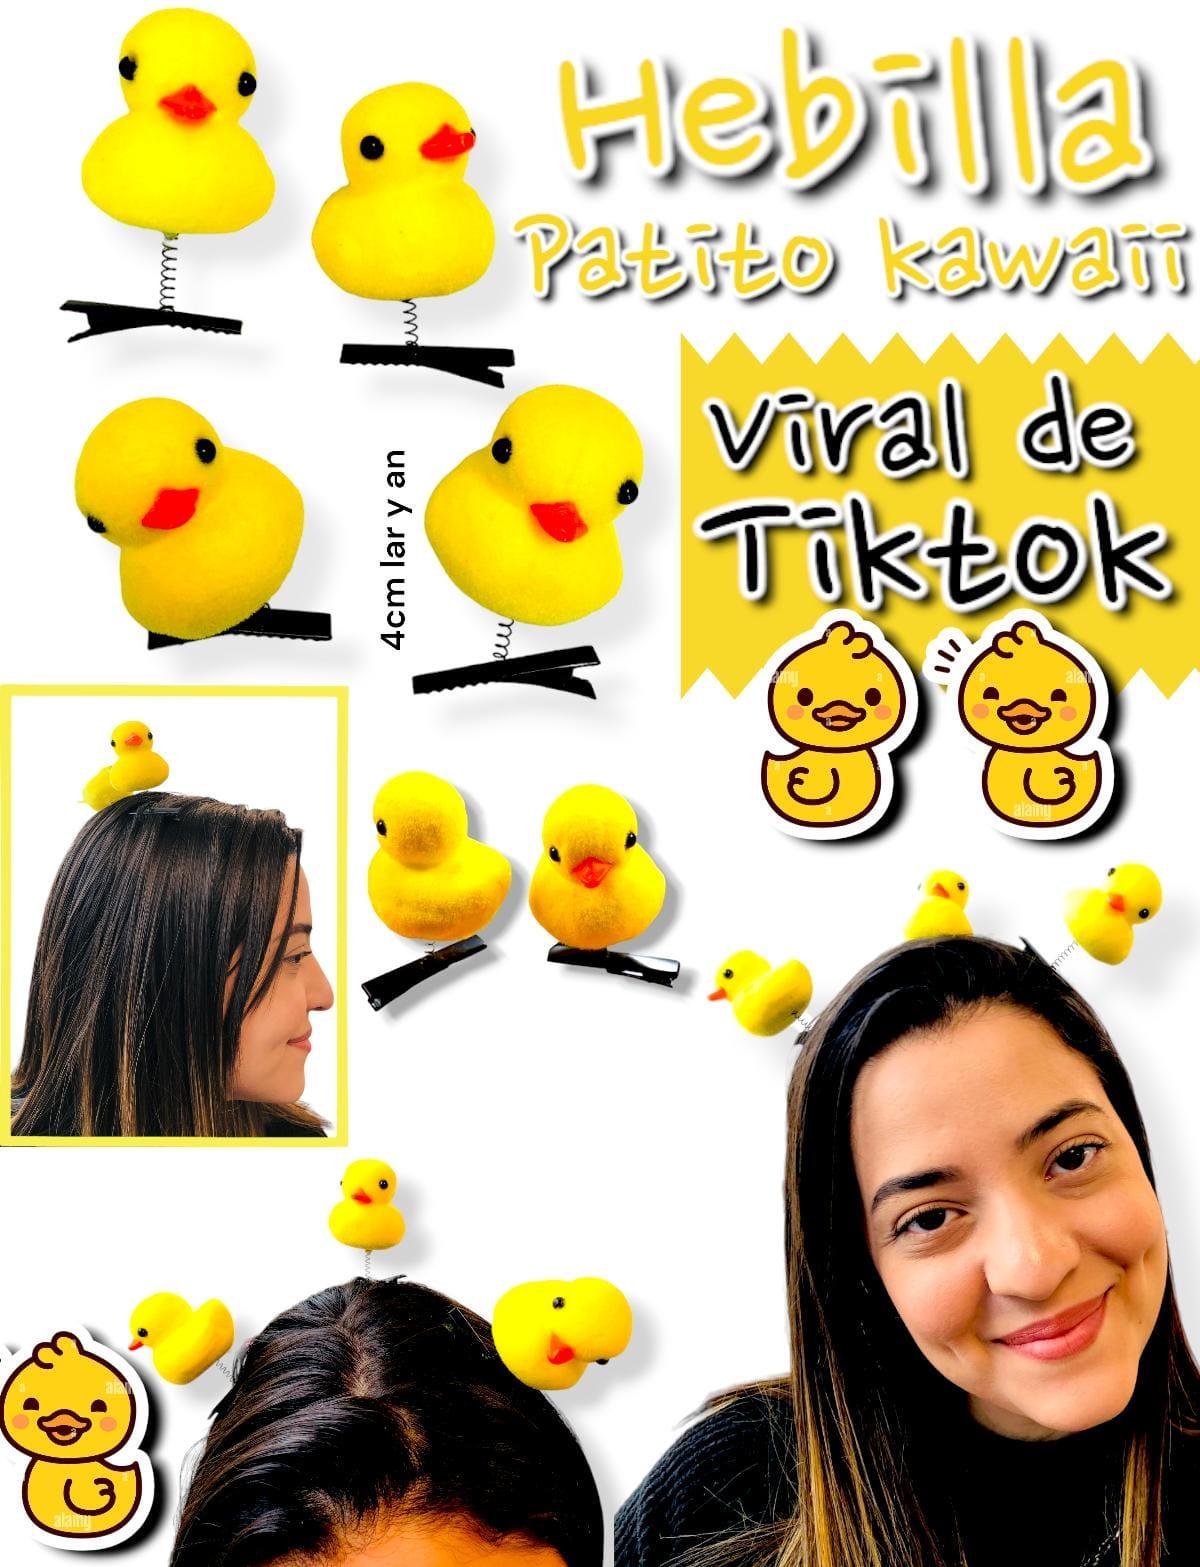 Hebilla Patito Kawaii Viral de Tiktok con accesorios